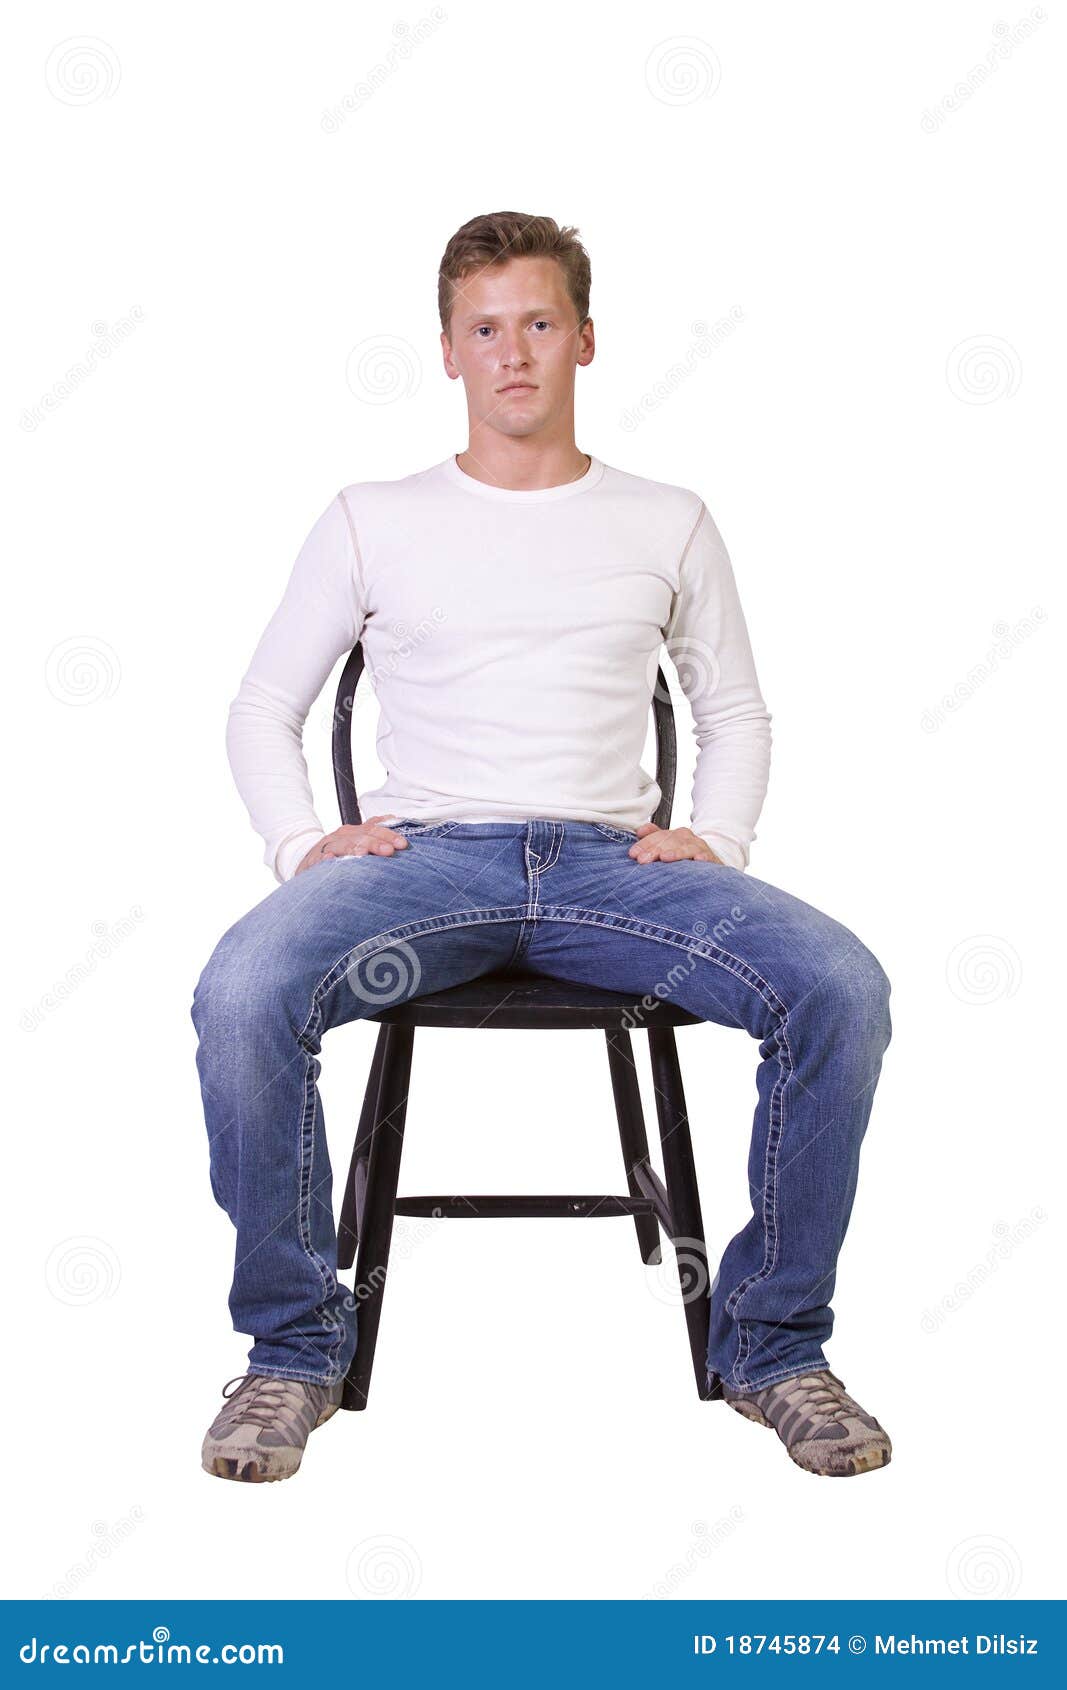 Мужчина широко сидит. Человек на стуле. Человек сидит на стуле. Сидячий человек. Человек на стуле прямо.